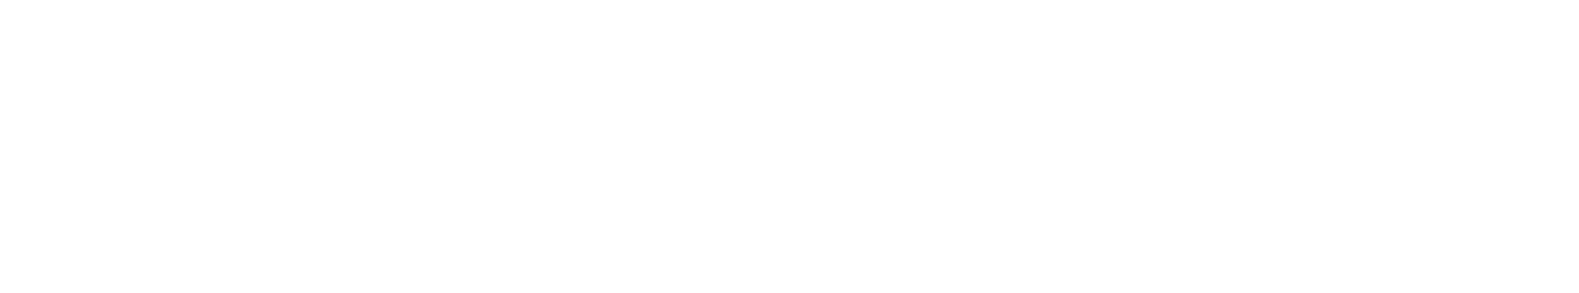 Singapore Land logo large for dark backgrounds (transparent PNG)